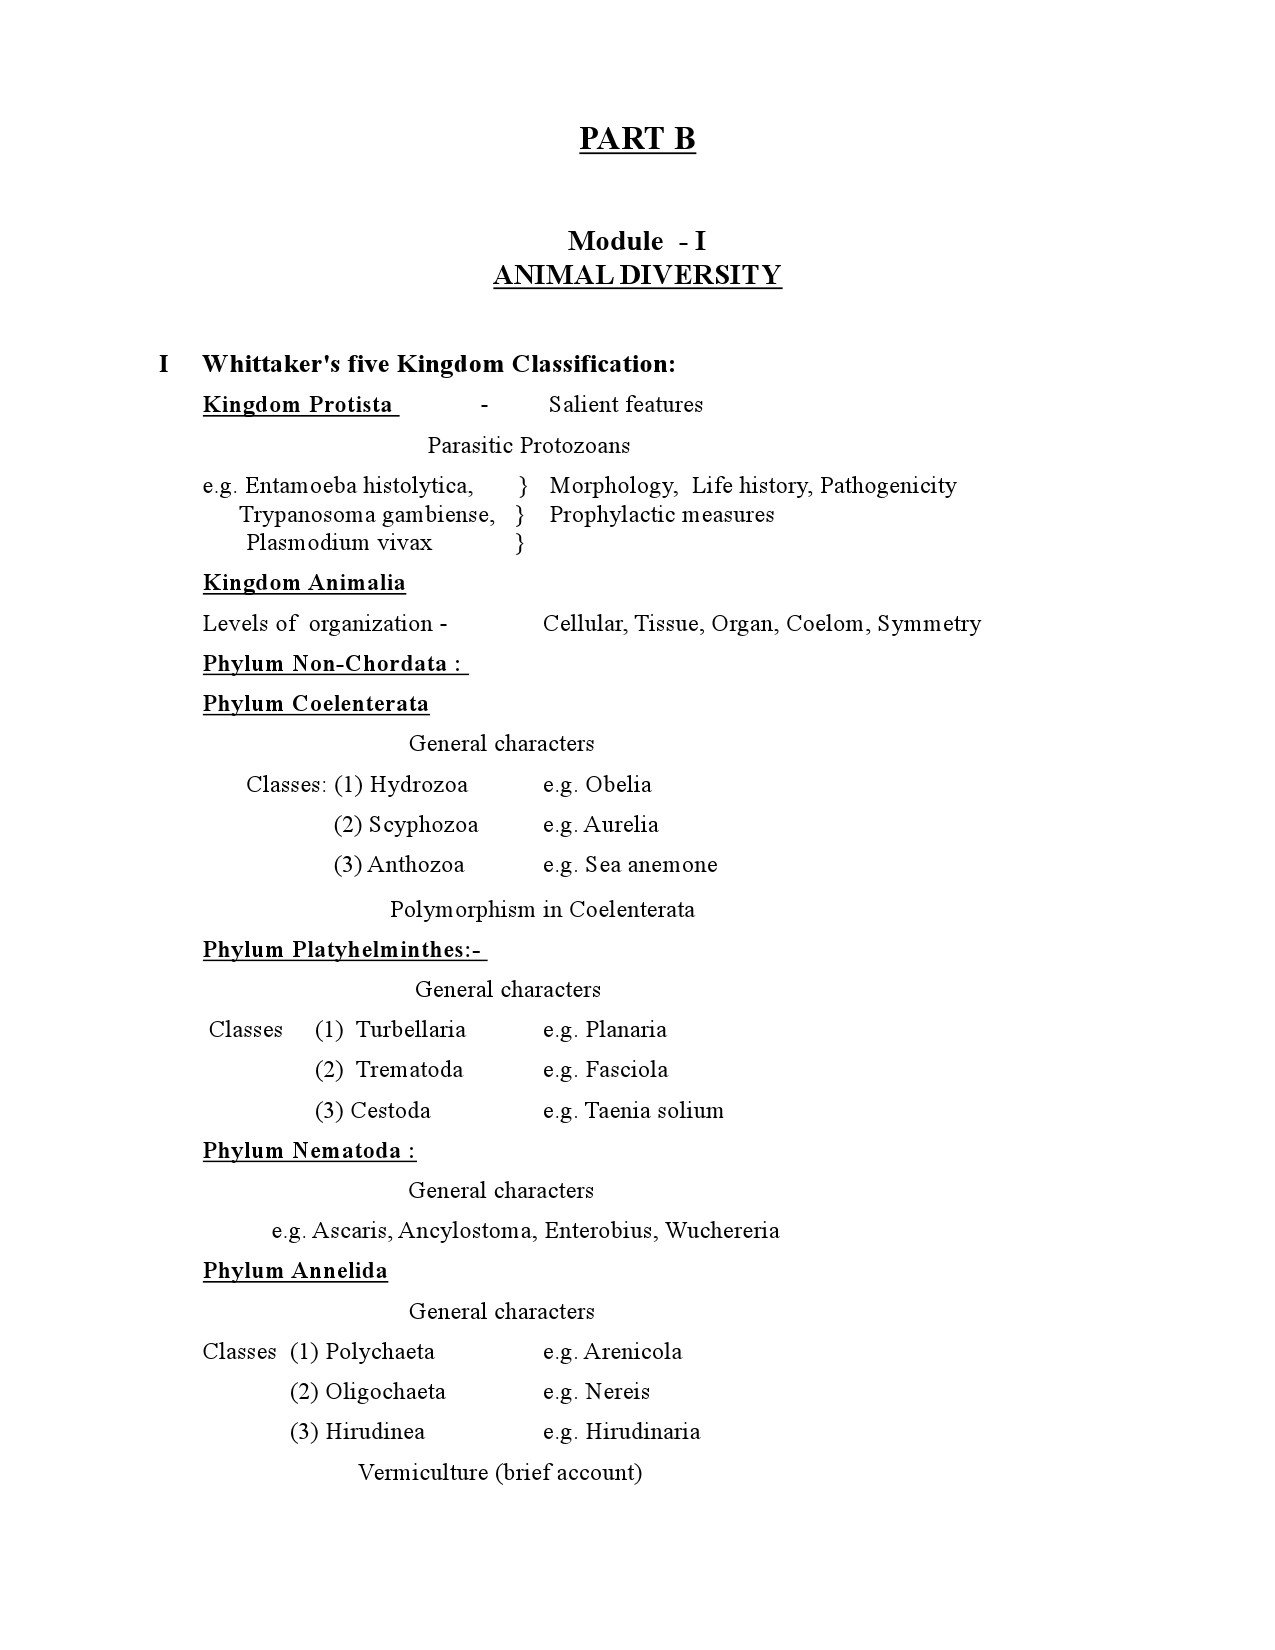 High School Assistant Natural Science Part A Kerala Examination Syllabus 2021 - Notification Image 2